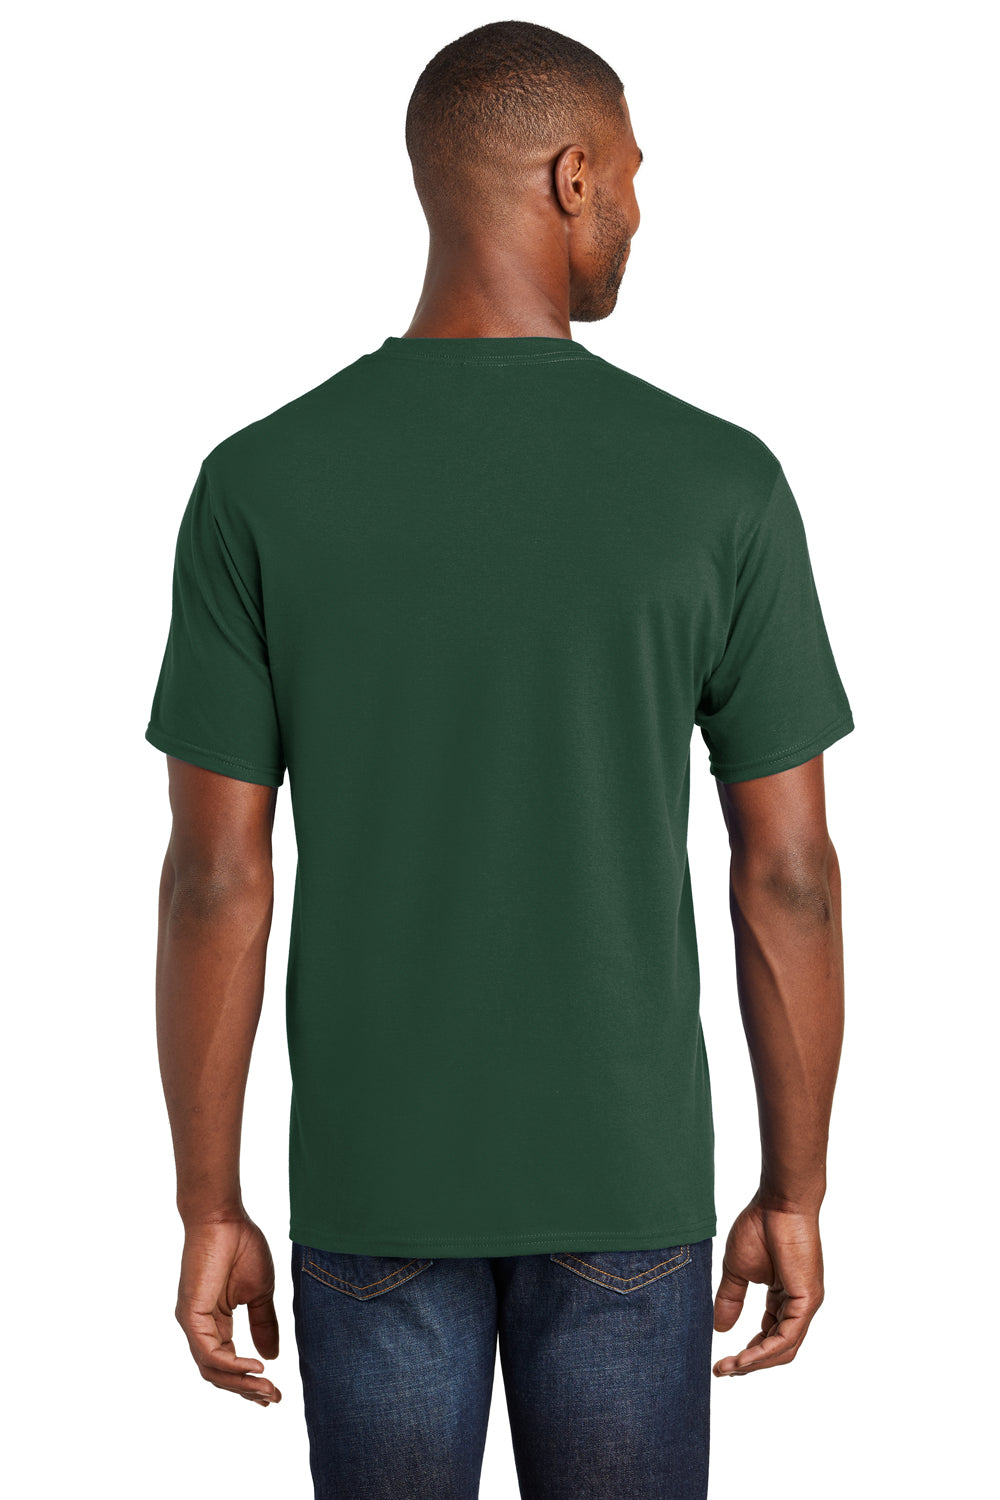 Port & Company PC450 Mens Fan Favorite Short Sleeve Crewneck T-Shirt Forest Green Back